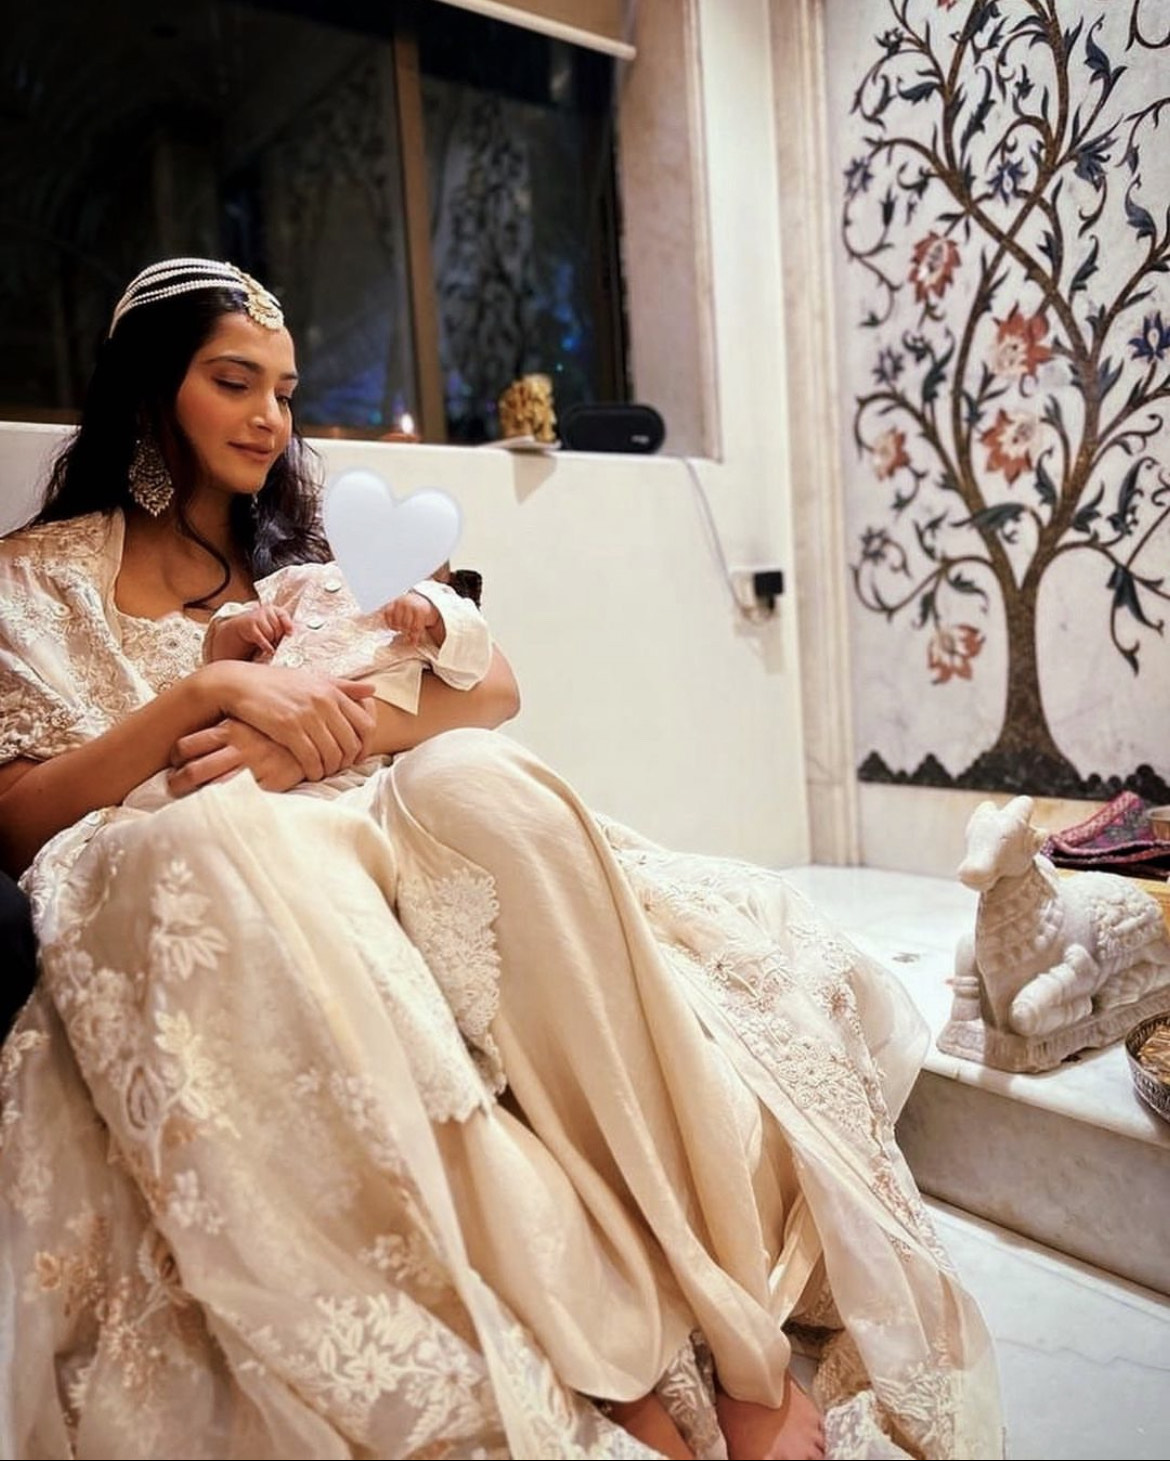 Sonam Kapoor Looks Like An English Bride In A Beautiful White Dress | POPxo